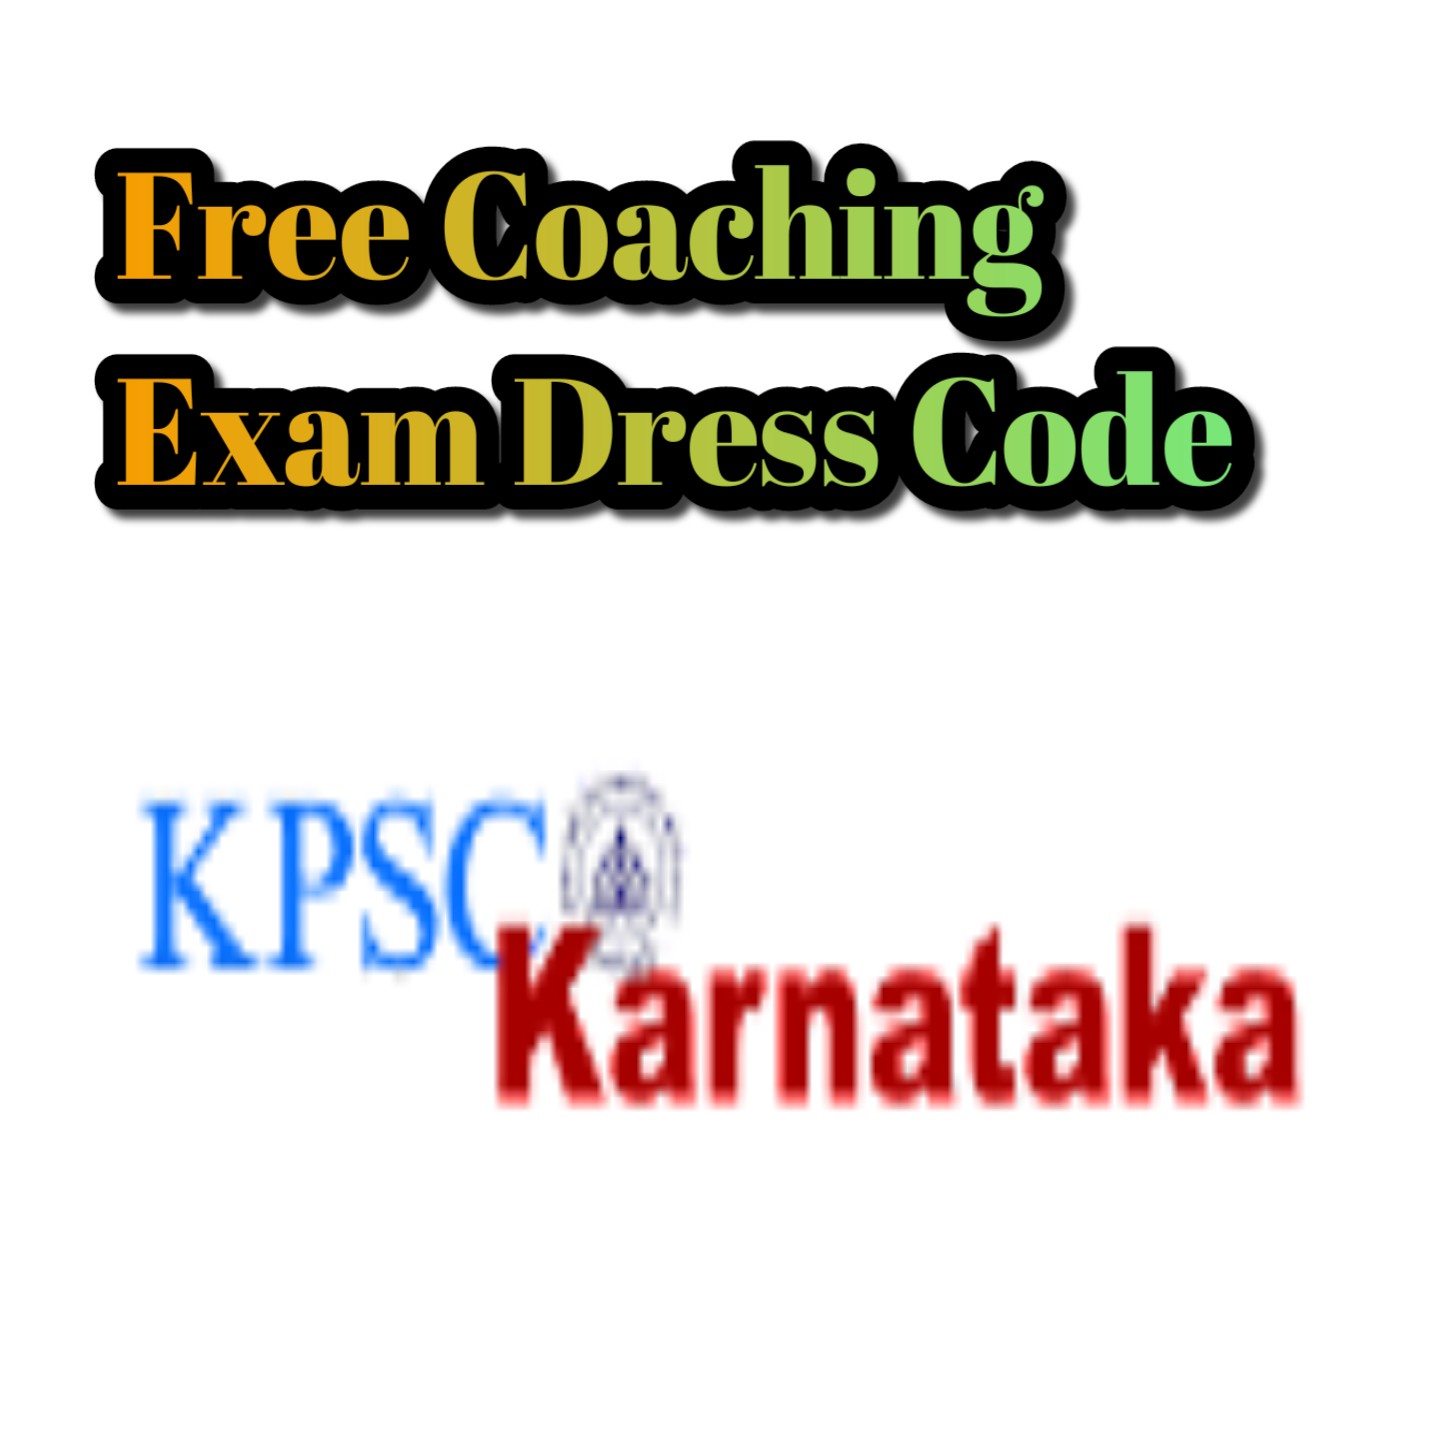 Free Coaching Exam Dress Code